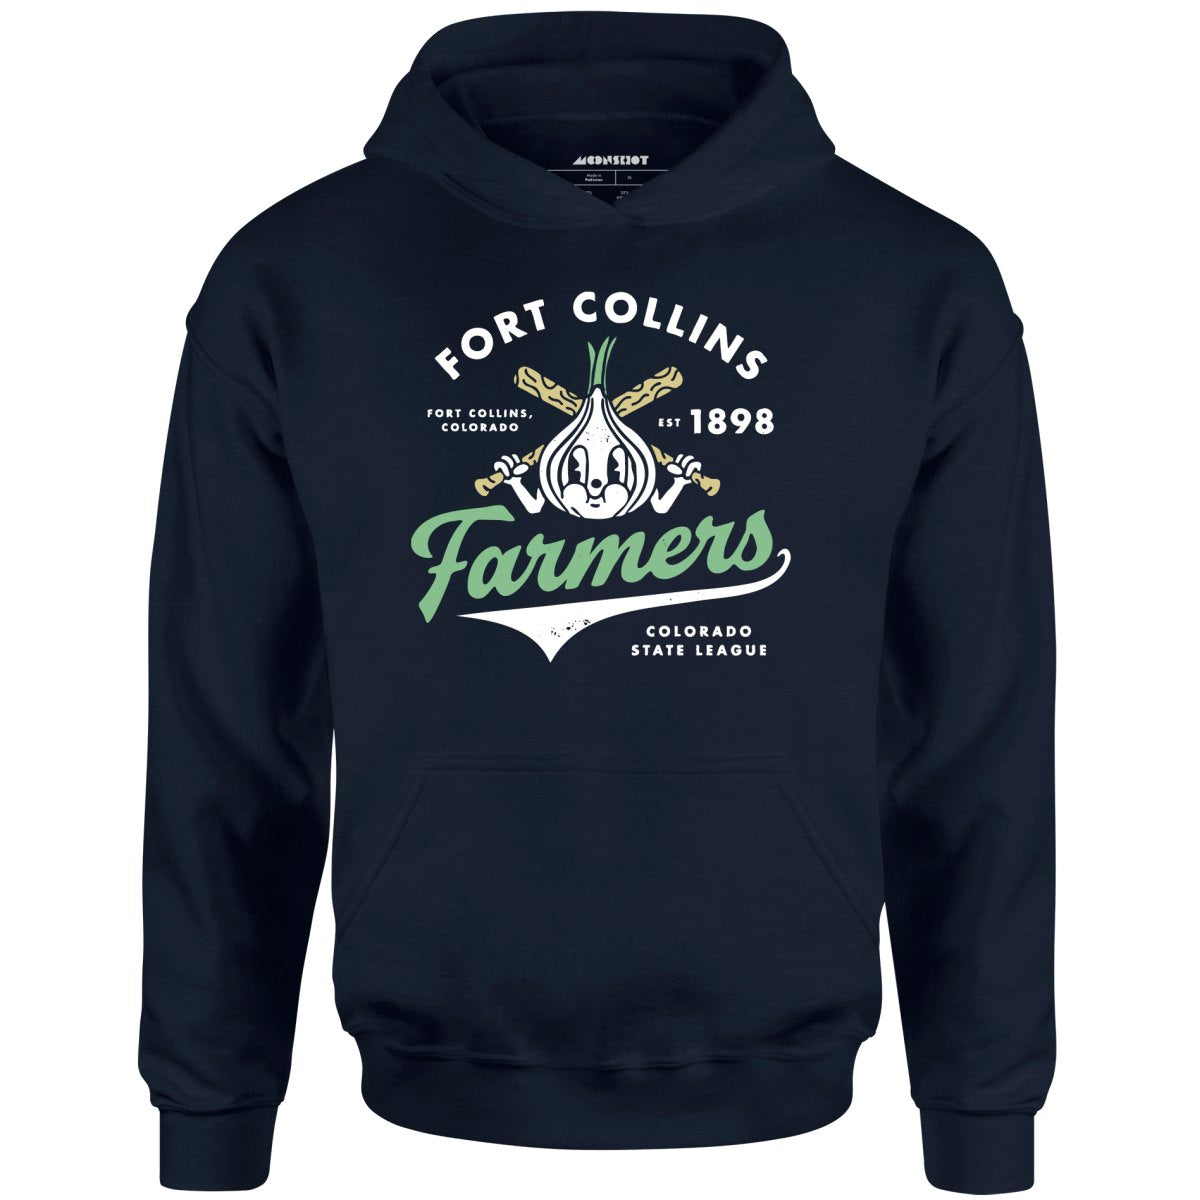 Fort Collins Farmers - Colorado - Vintage Defunct Baseball Teams - Unisex Hoodie